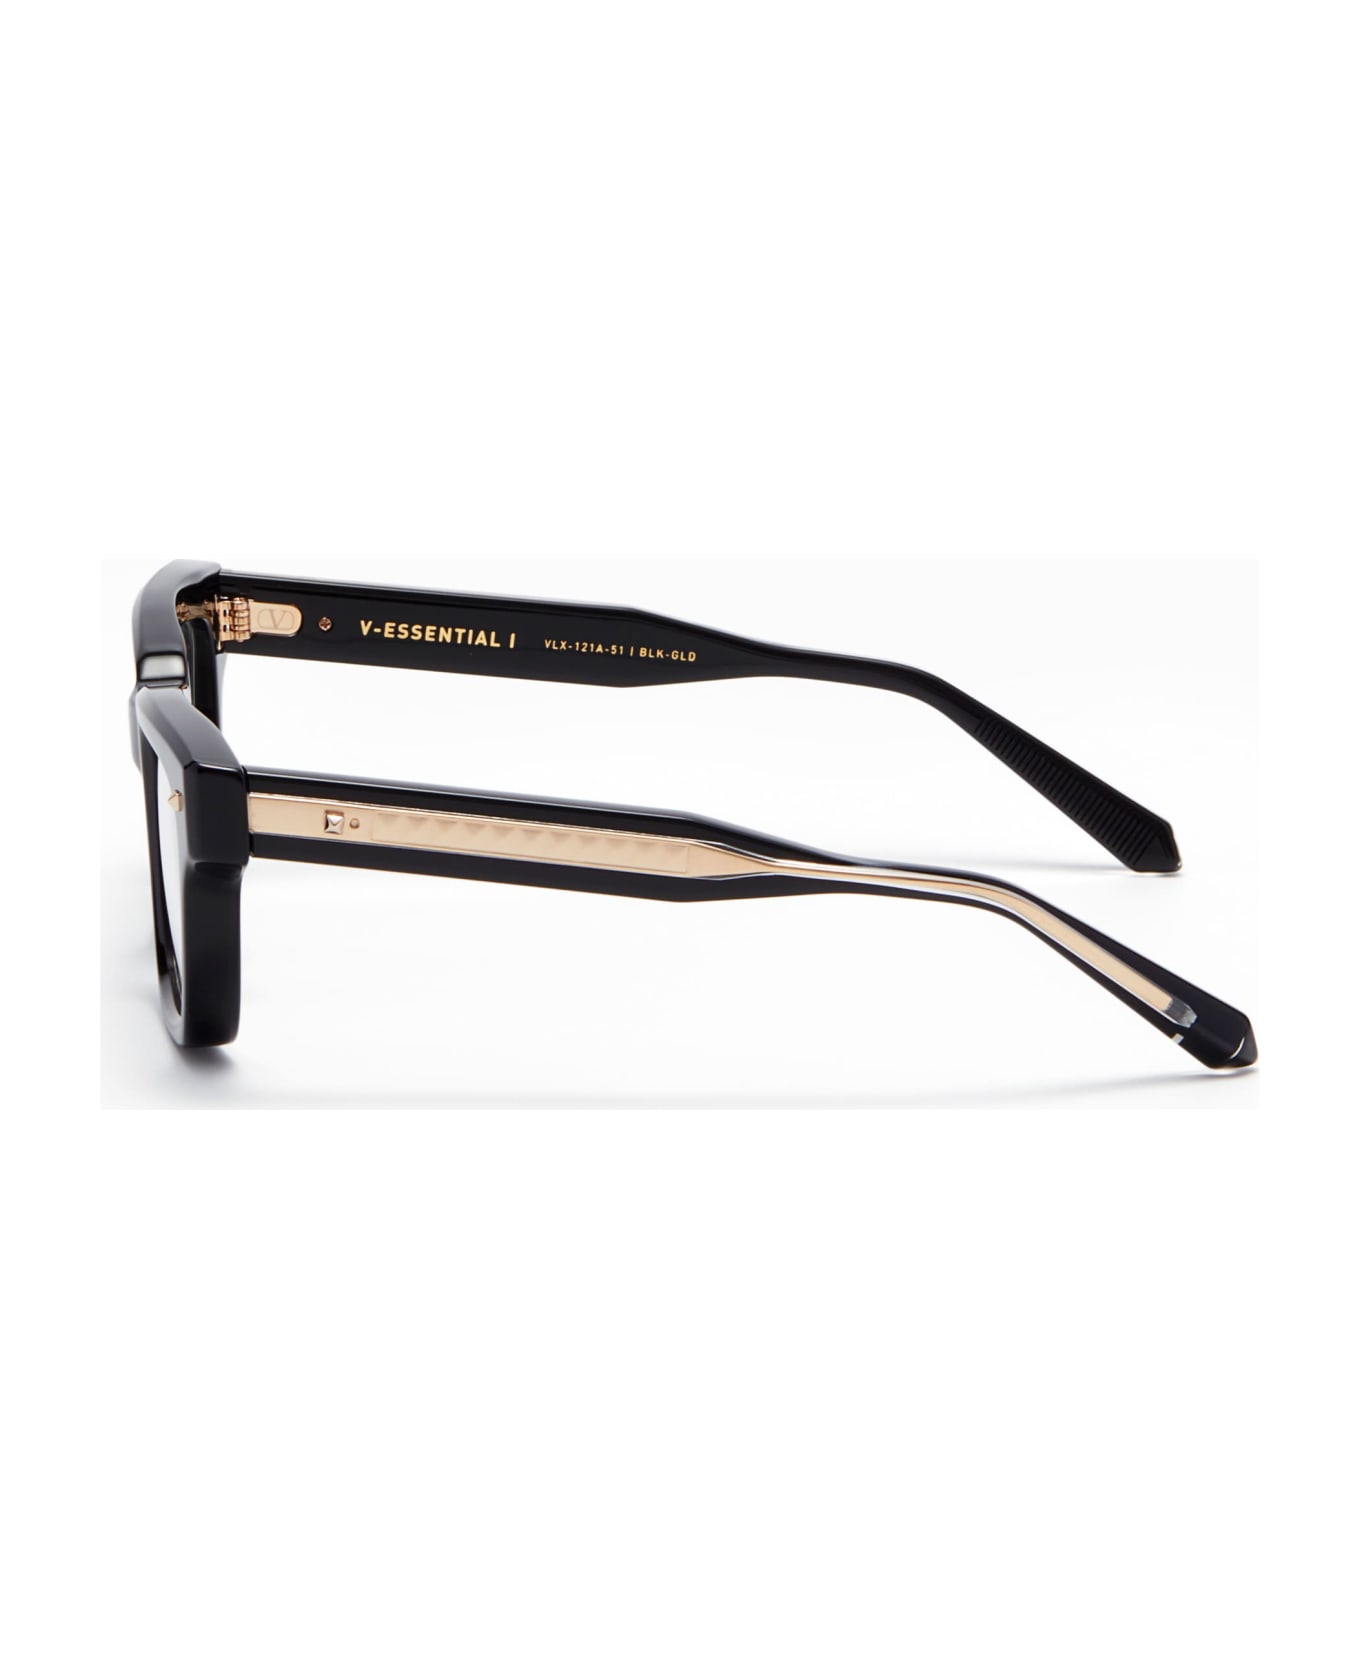 Valentino Eyewear V-essential I - Black Rx Glasses - Black